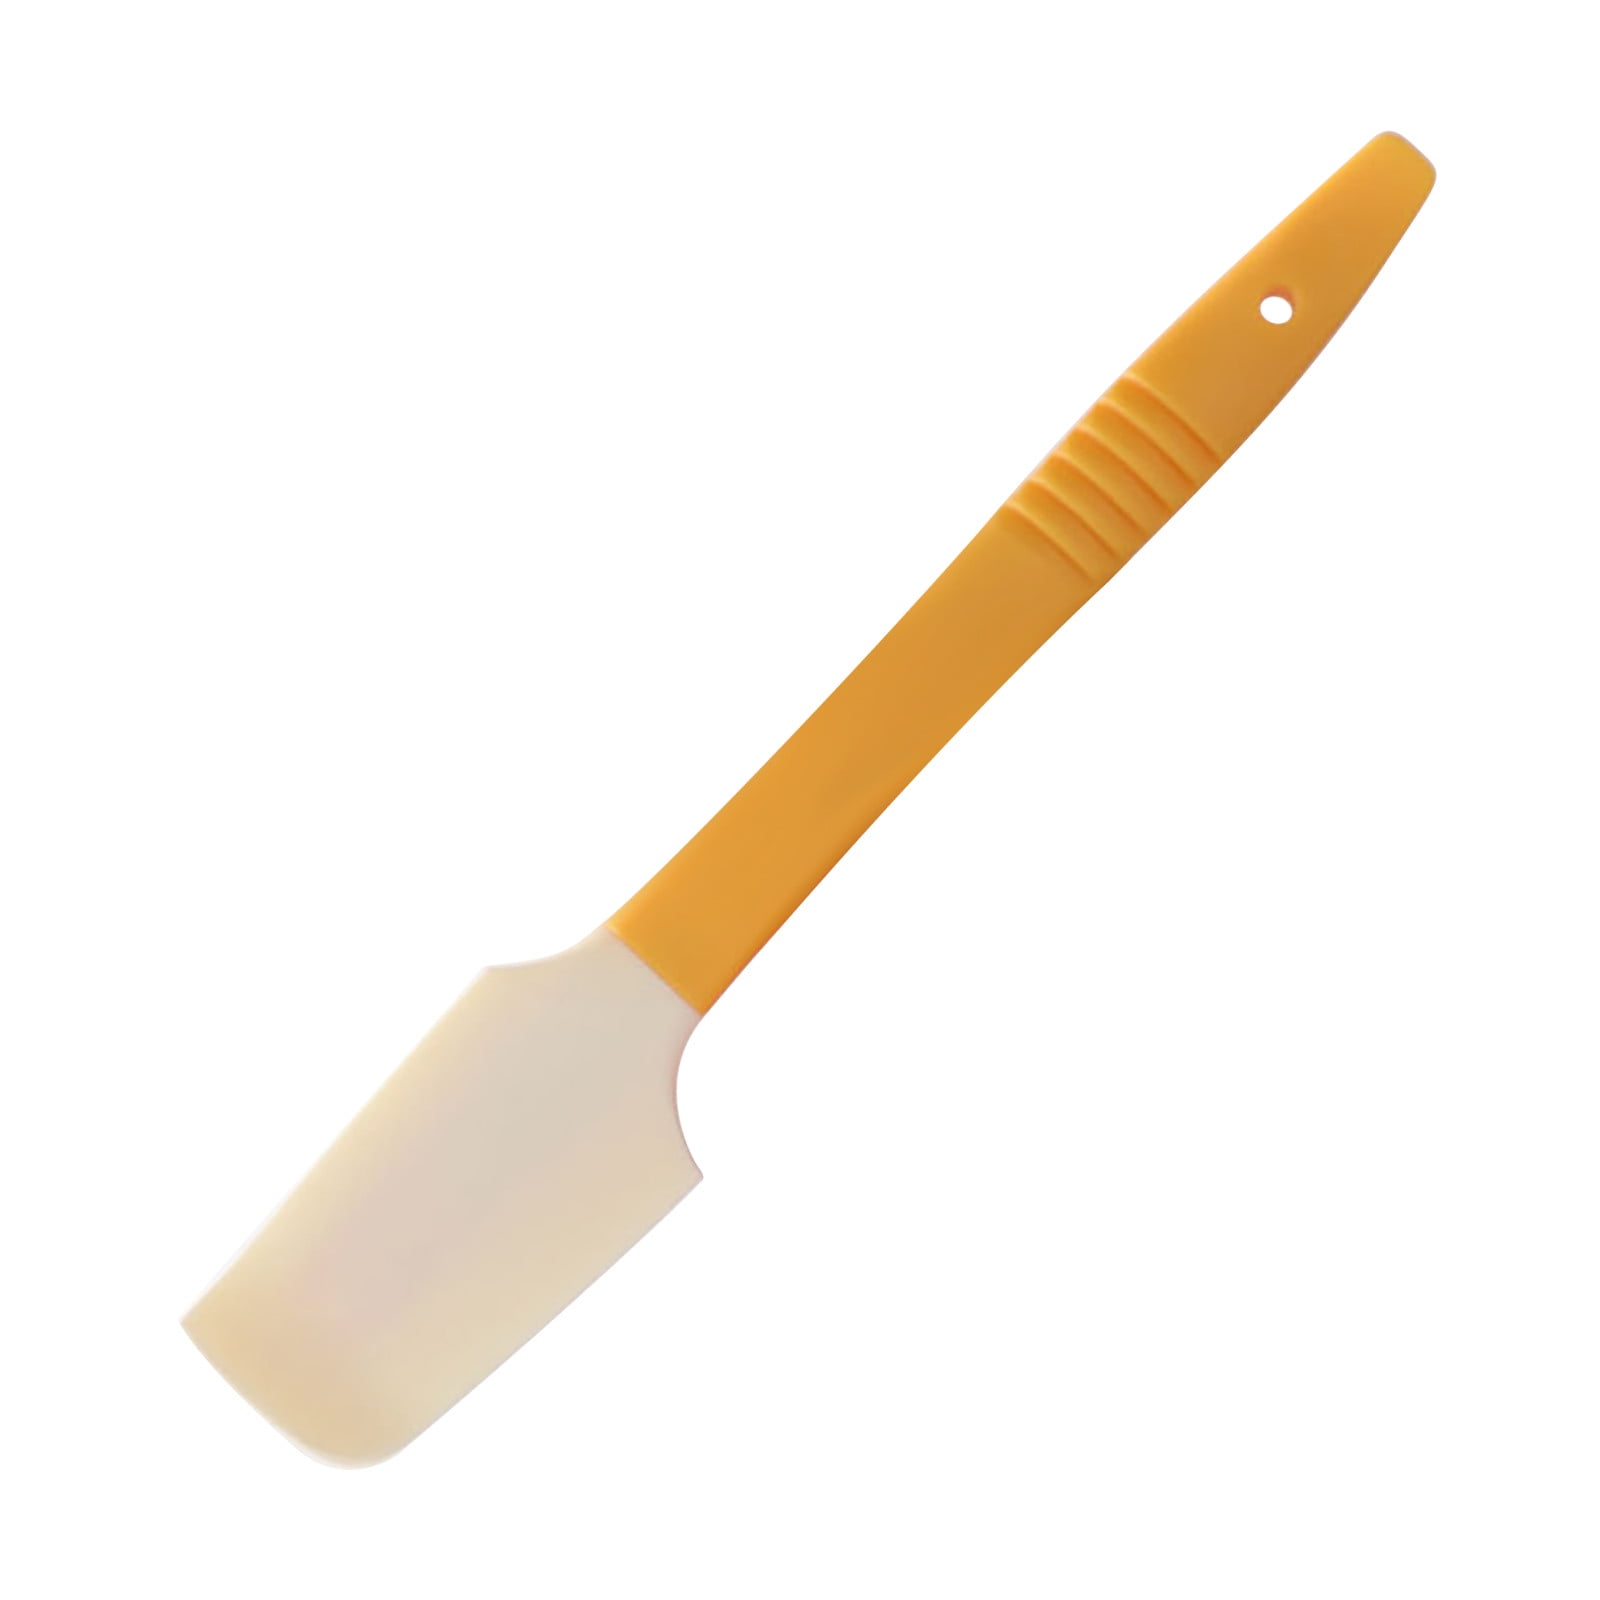 FFENYAN Discount Kitchen Scraper Small Mini Spatula Spoon Baking Bread  Sandwich Butter Spreader Knife 